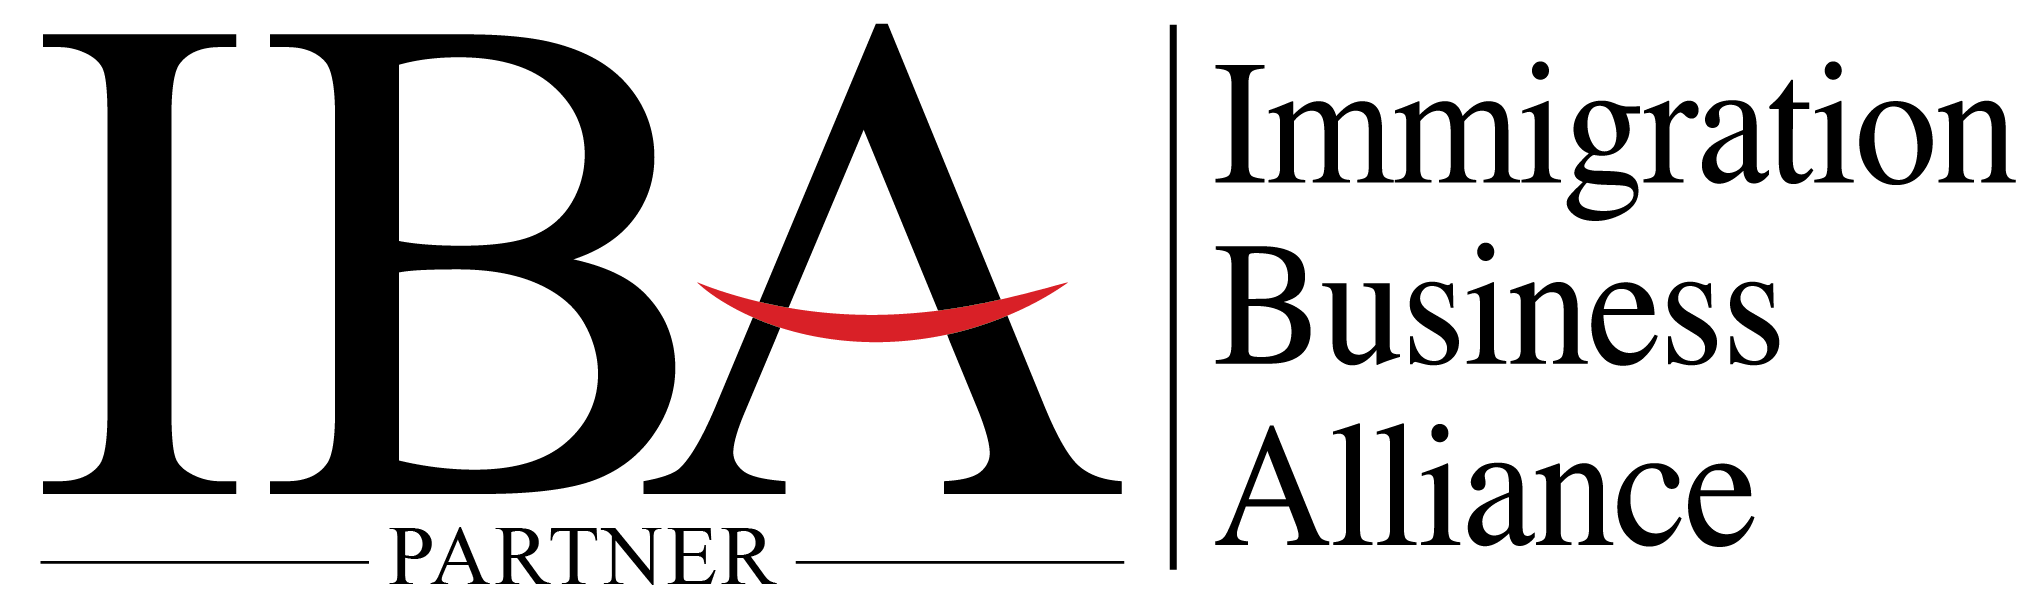 Immigration Business Alliance Partner logo